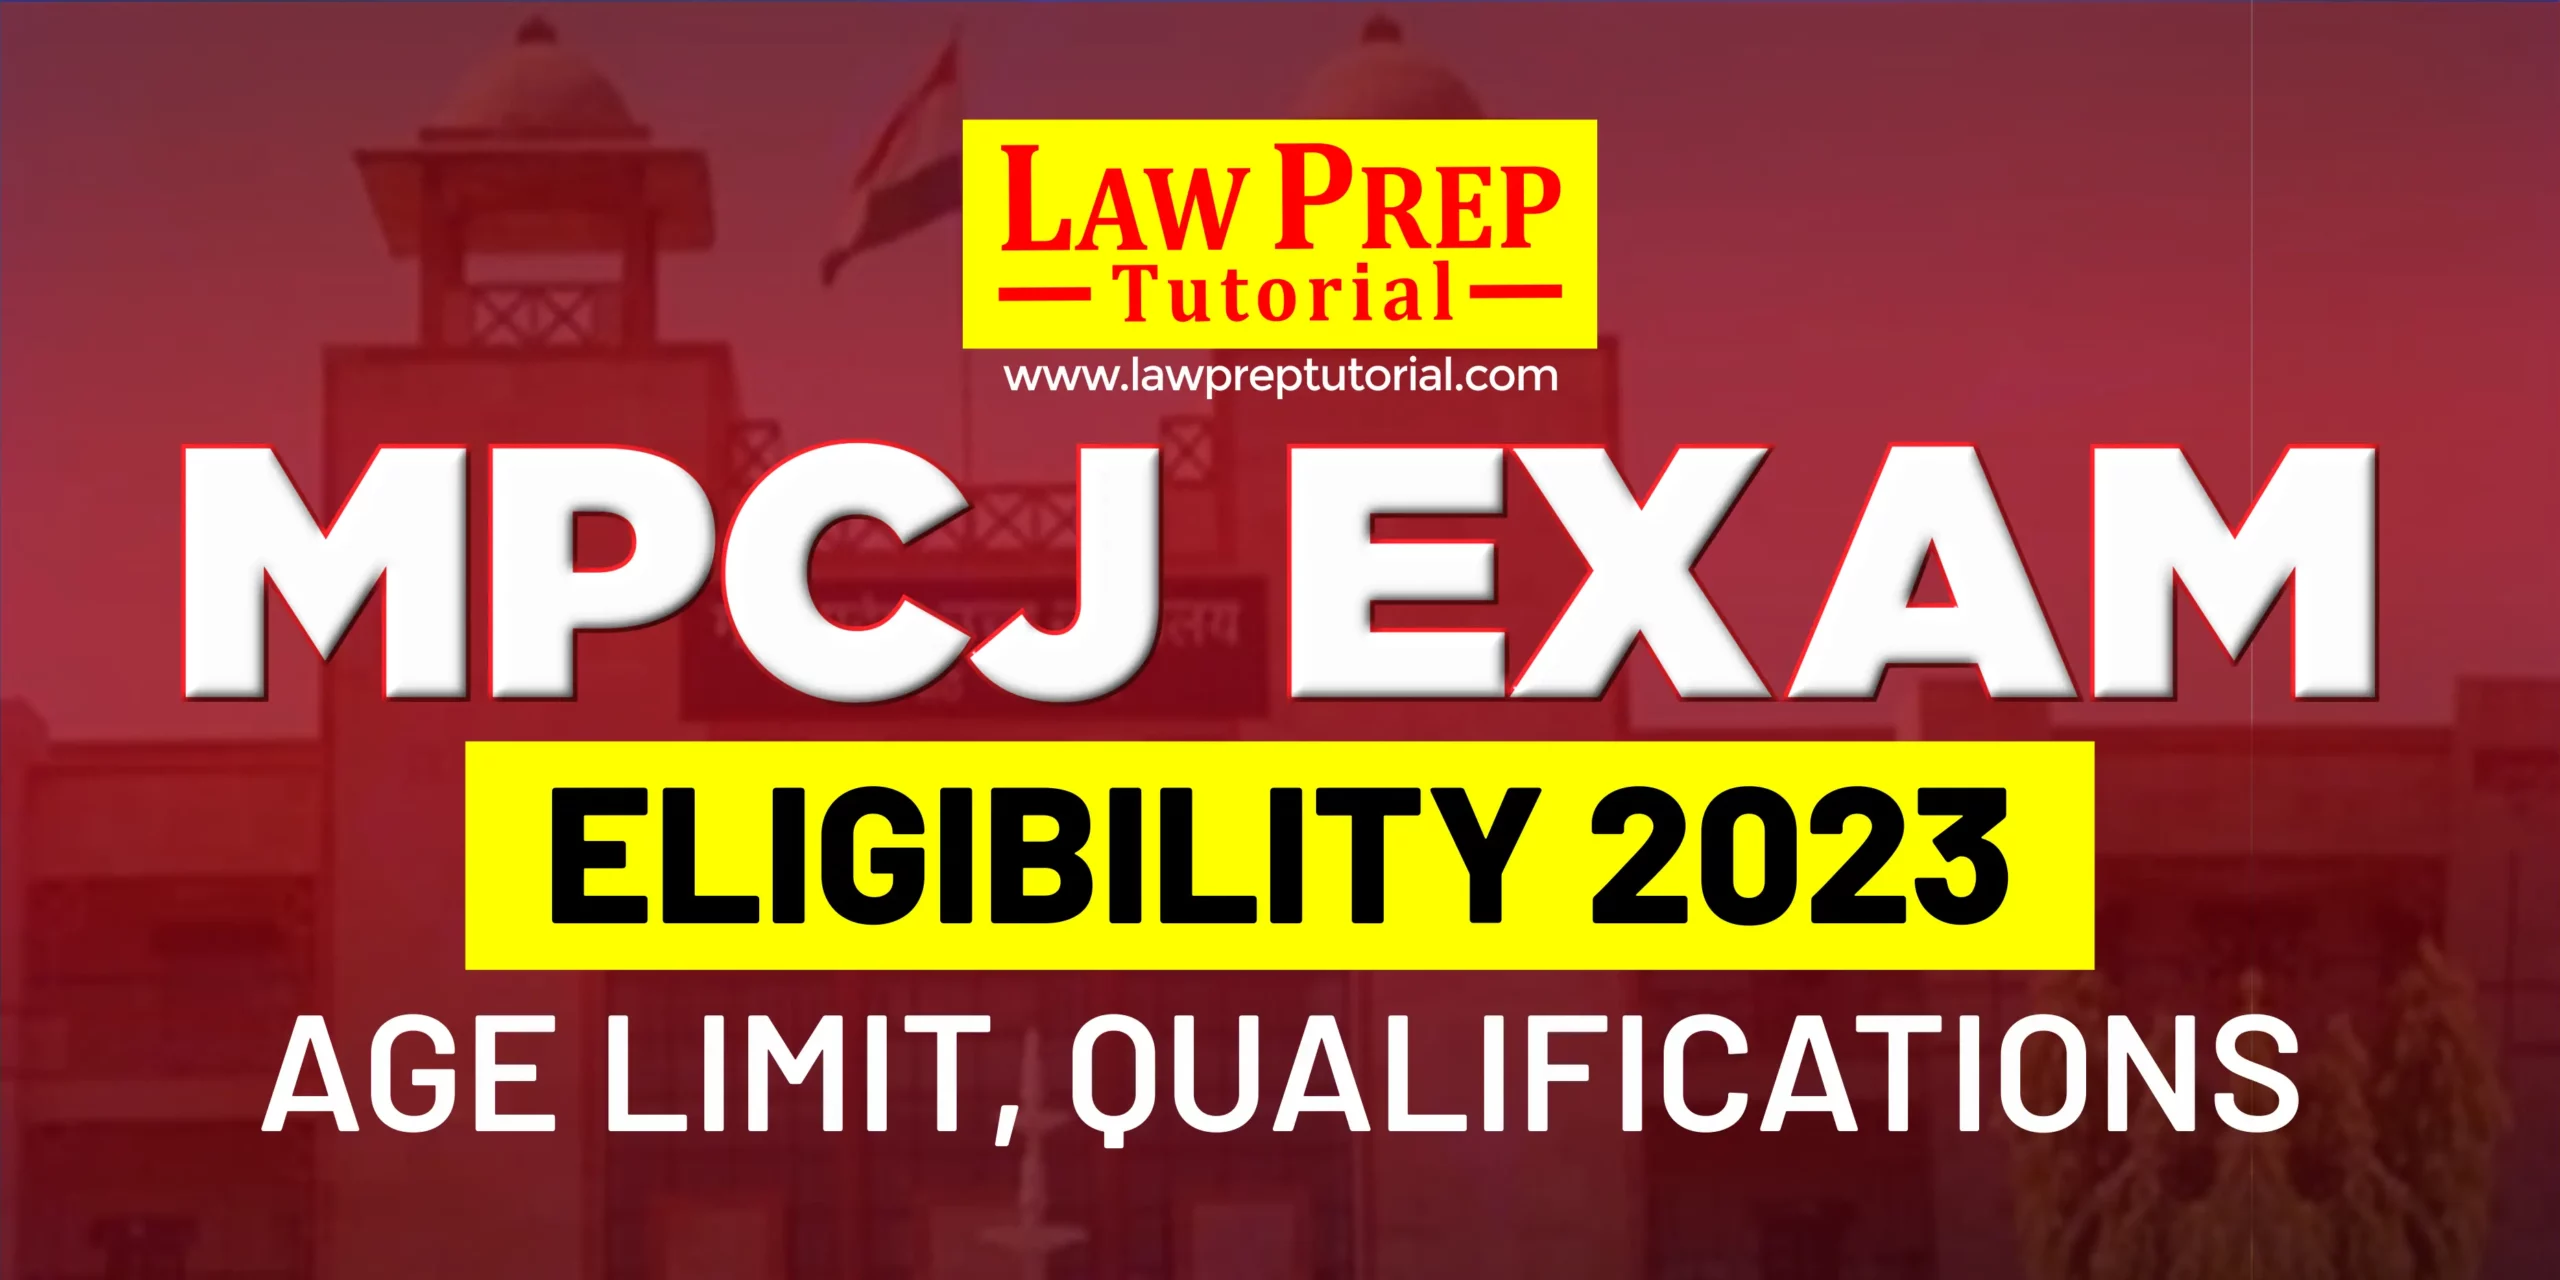 MPCJ Exam Eligibility 2023